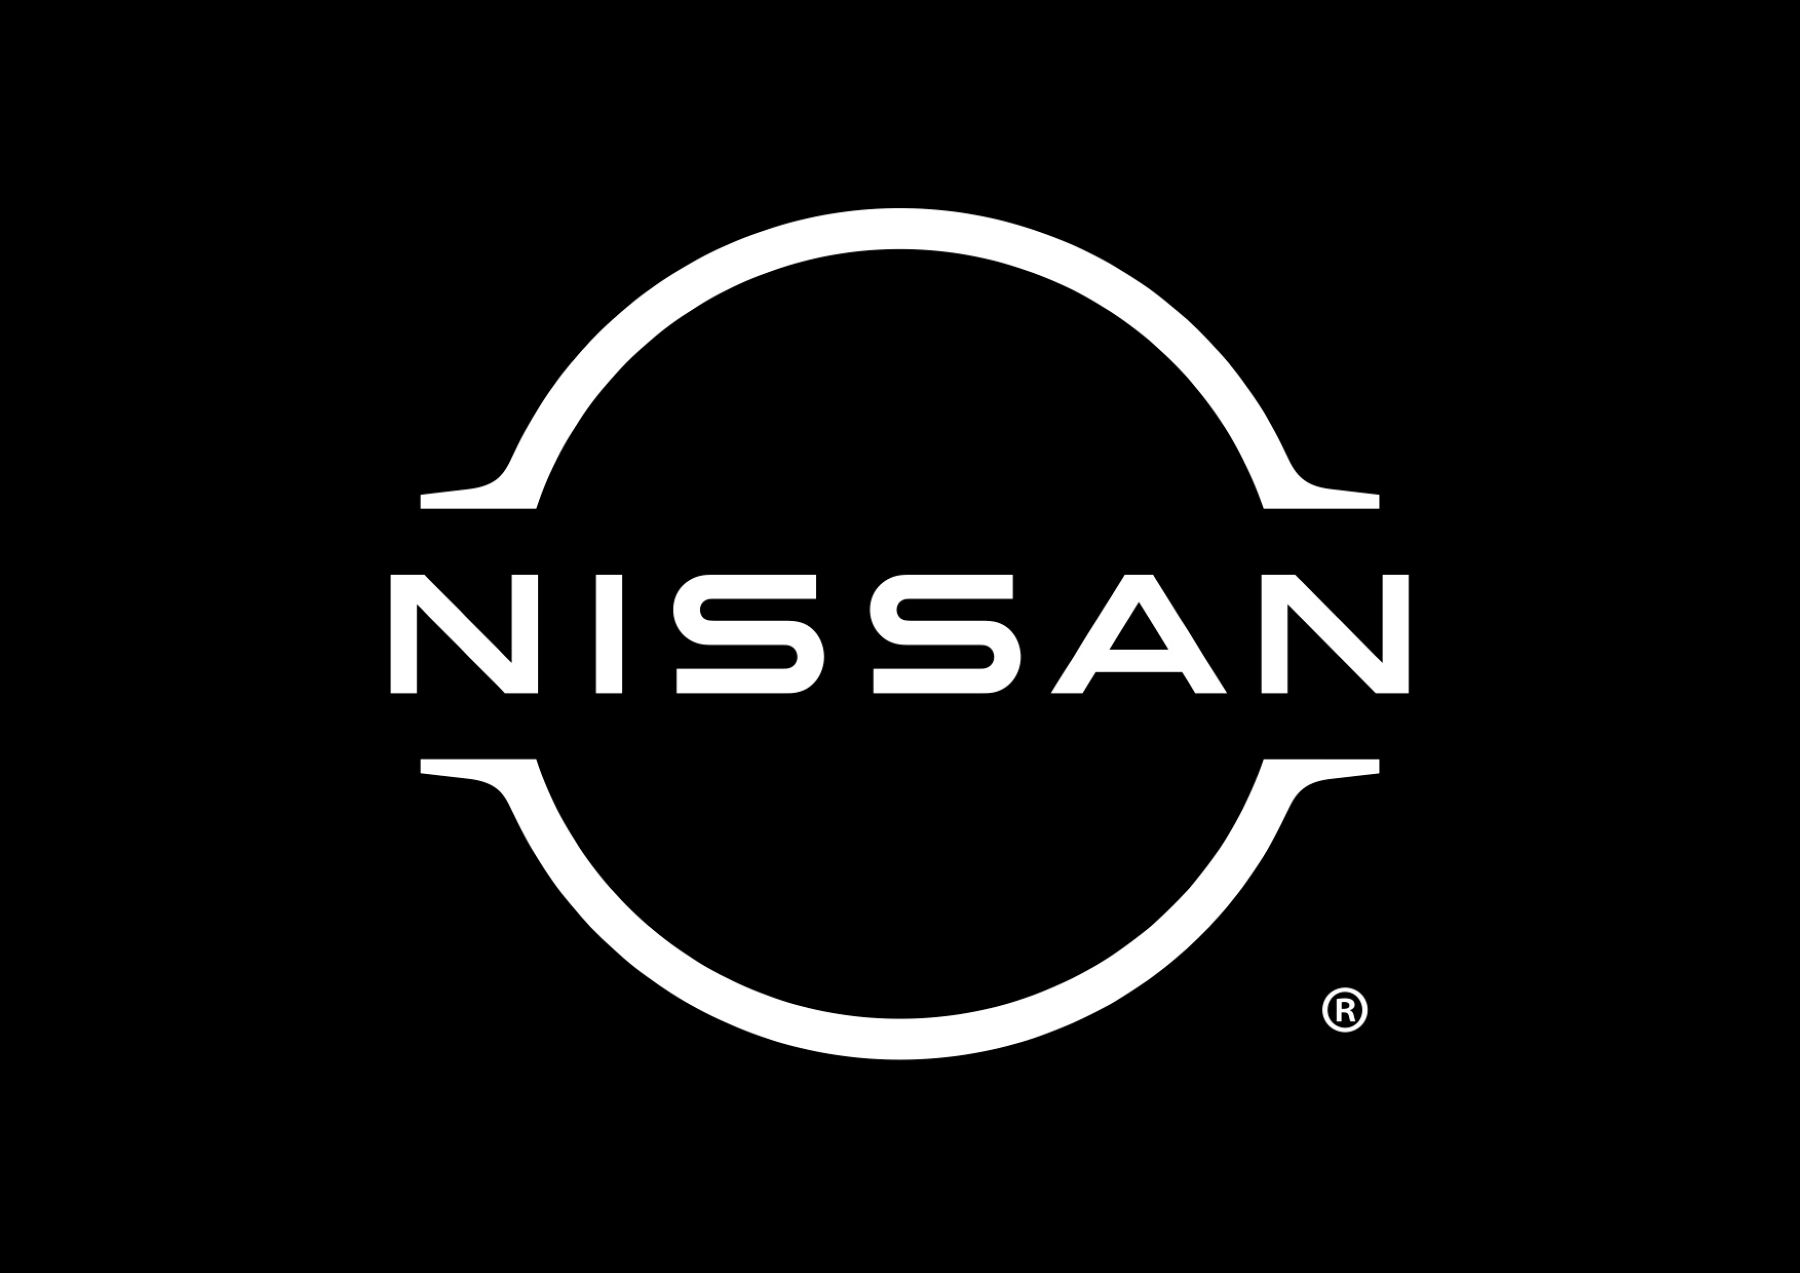 The Nissan brand logo